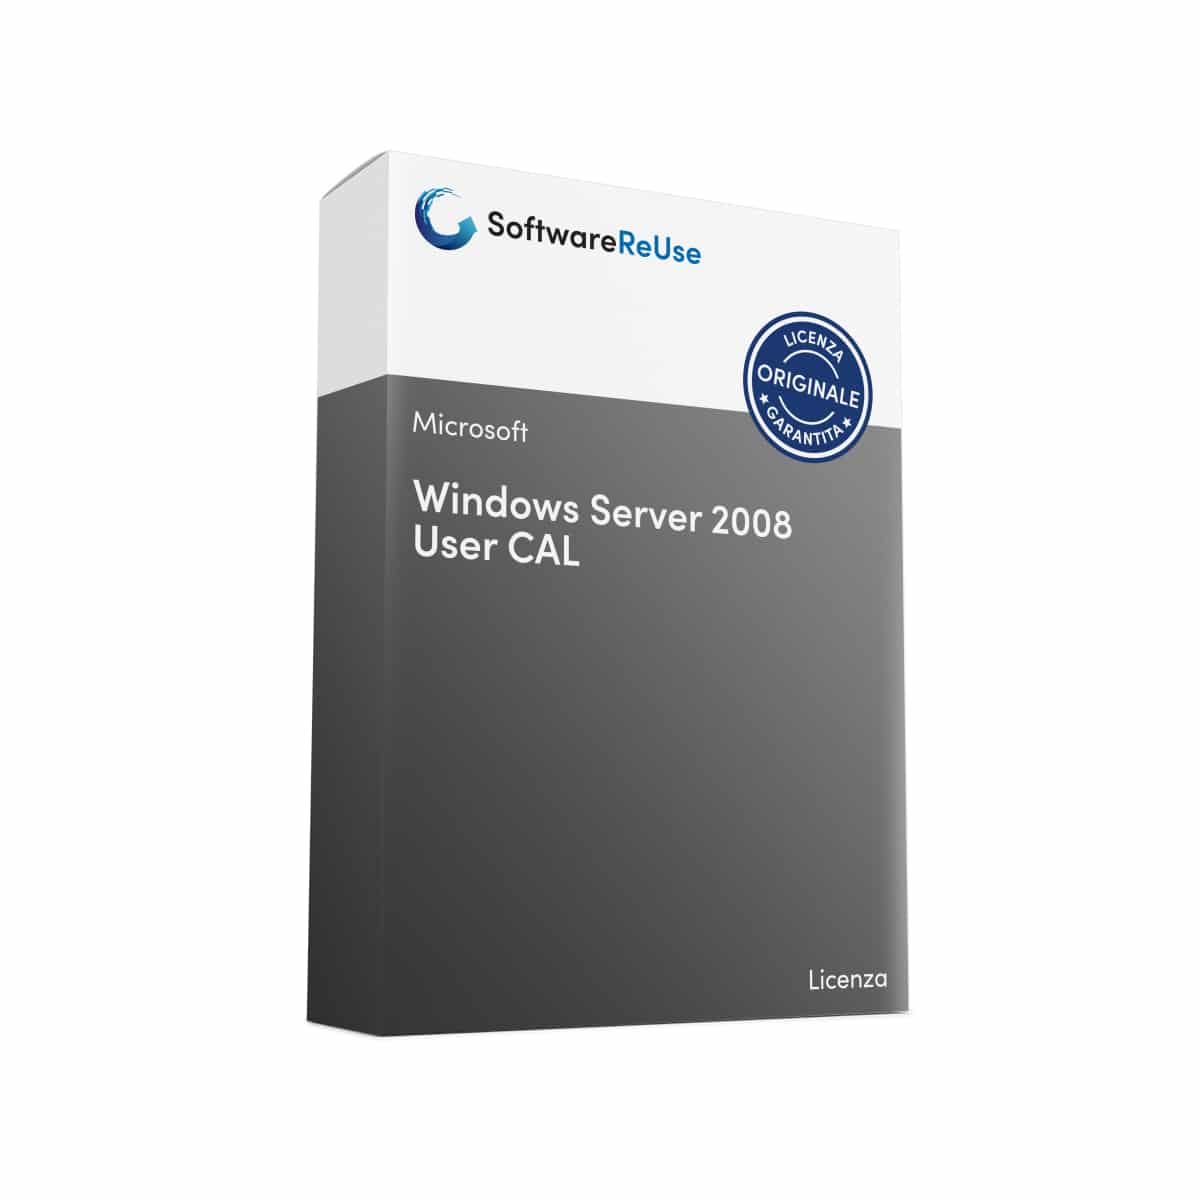 Windows Server 2008 User CAL – IT 1